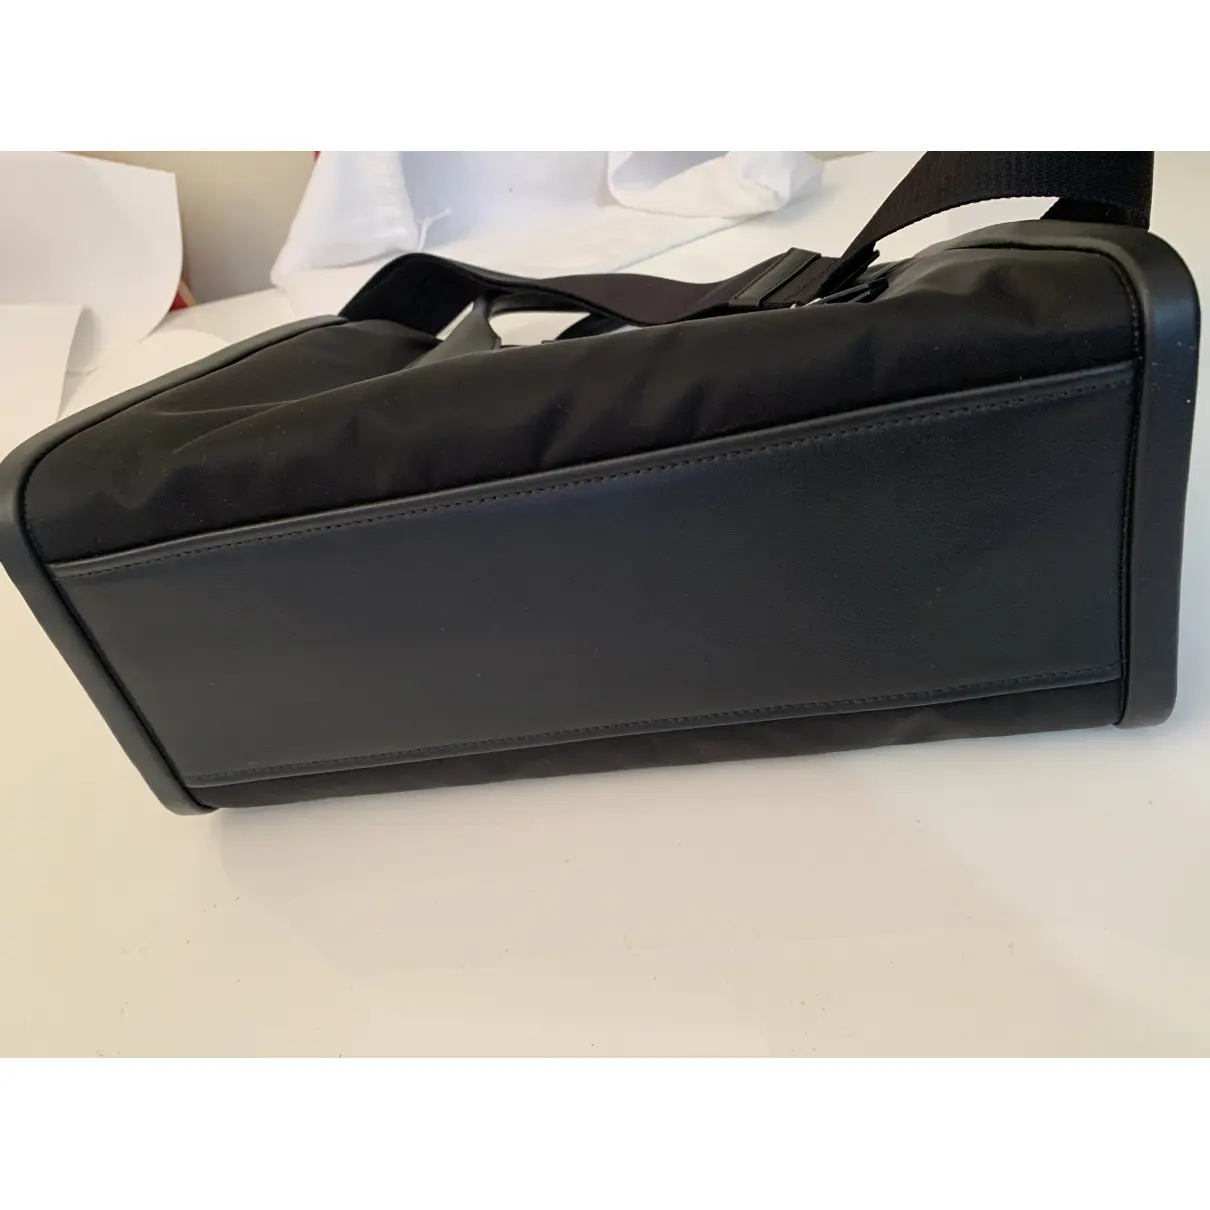 Buy Prada Concept leather handbag online